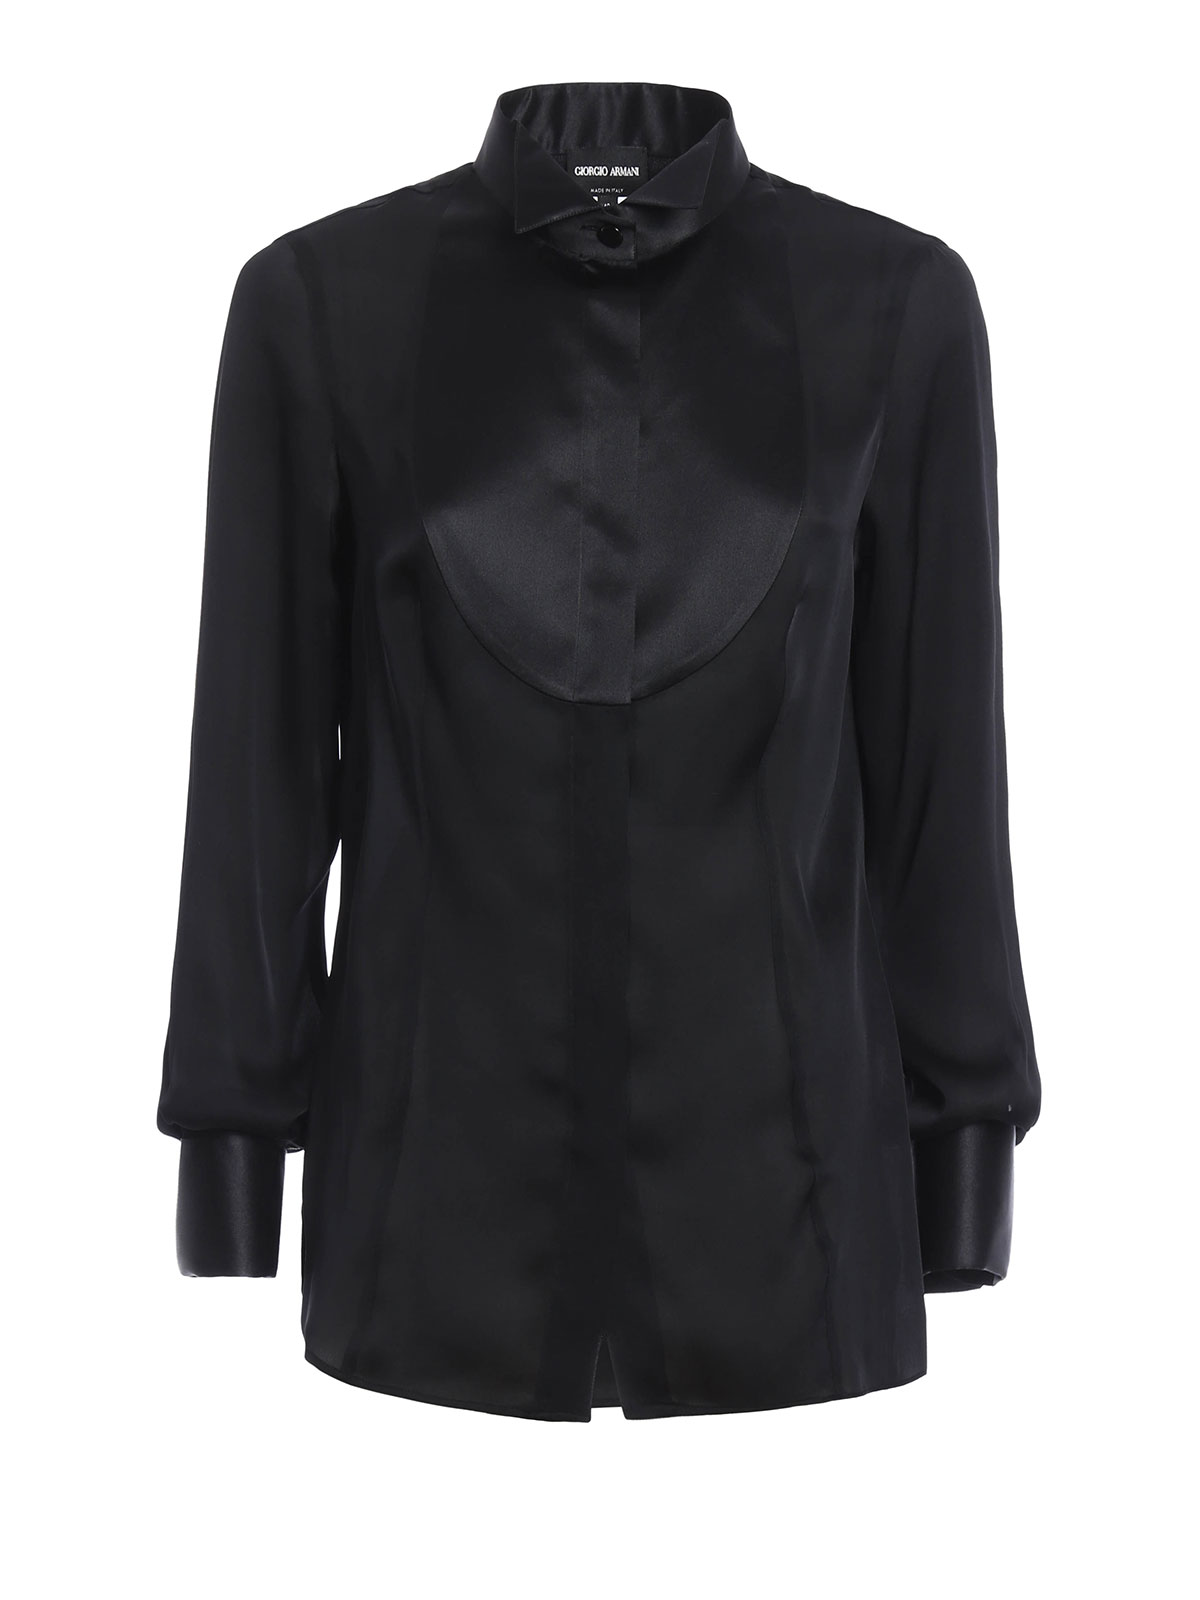 Shirts Giorgio Armani - Silk tuxedo shirt - 0AC02T0A06C997 